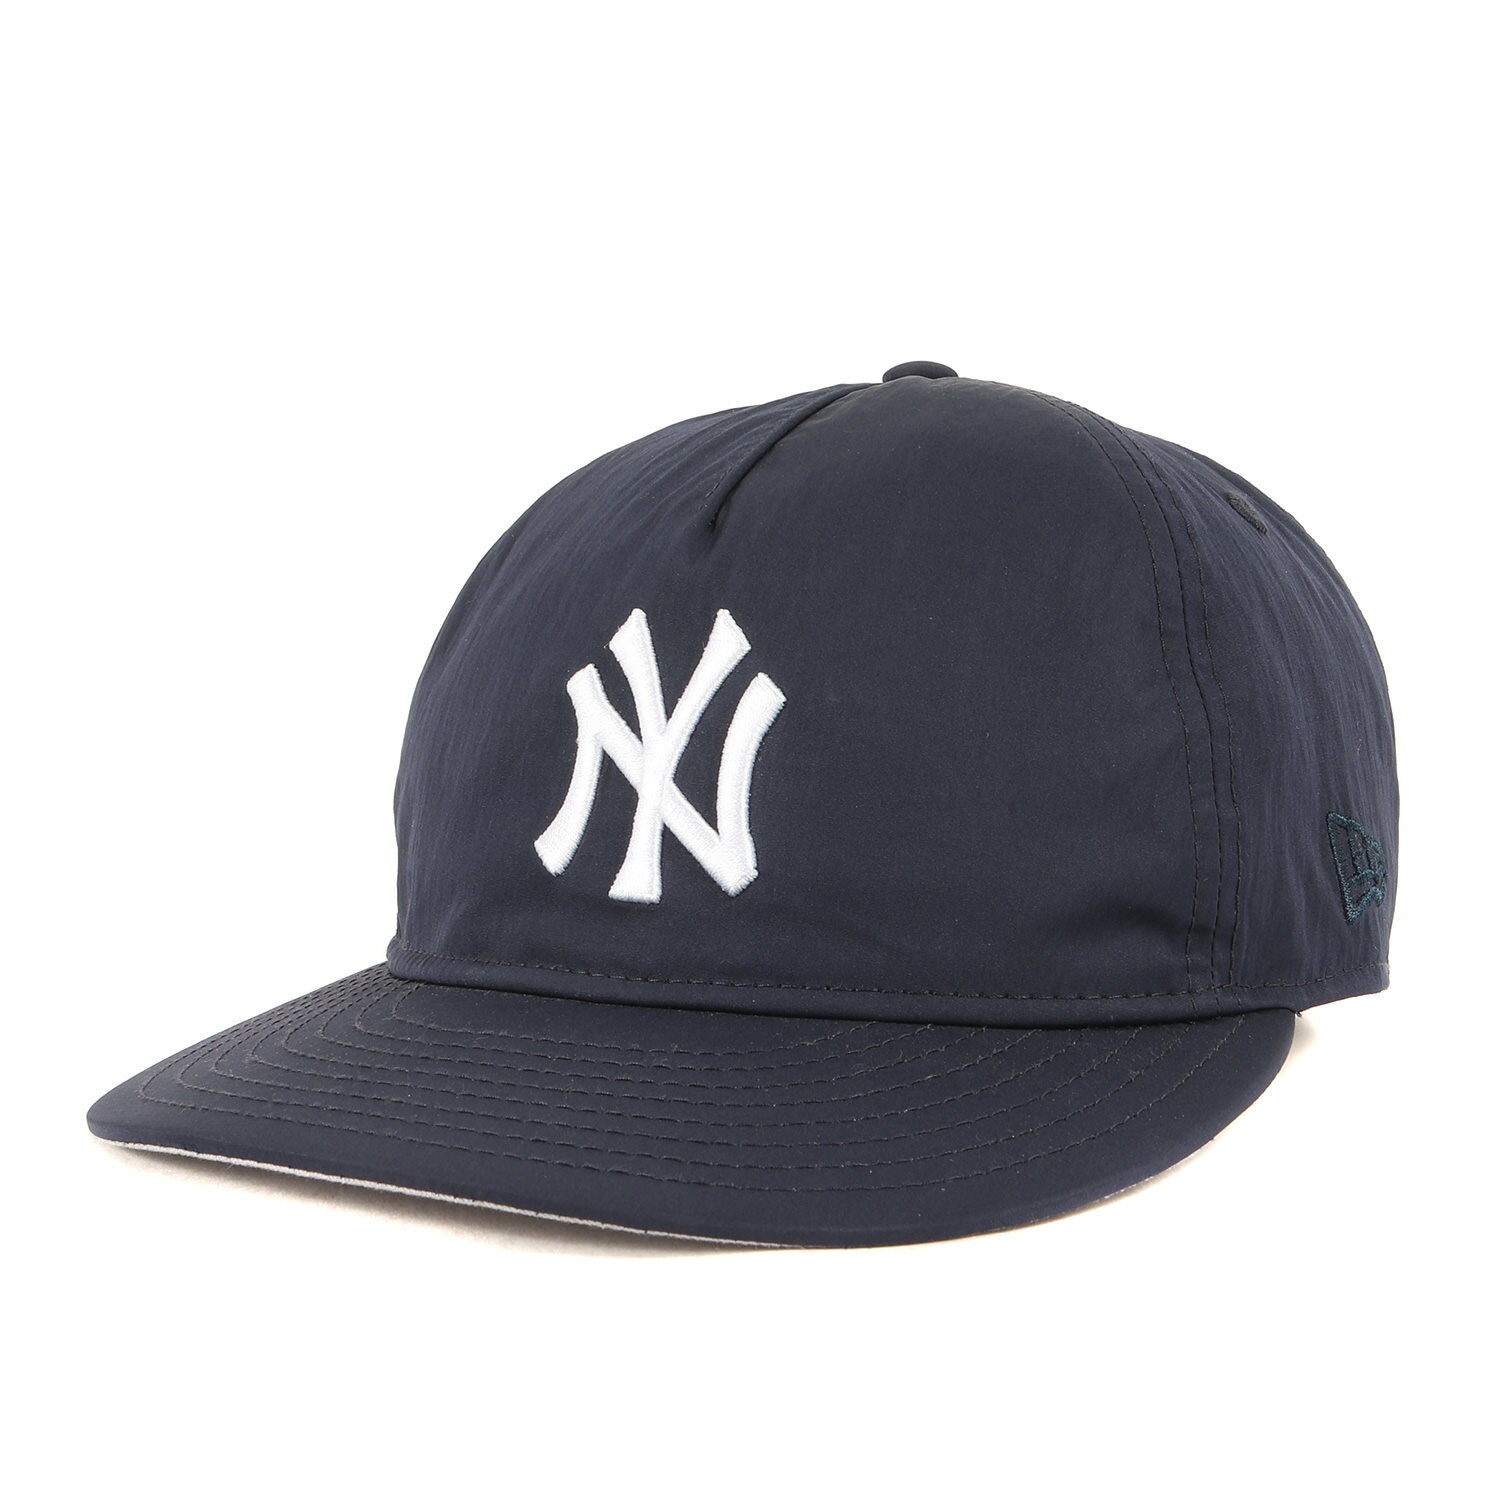 KITH NYC キス ニューヨークシティー キャップ サイズ:ONE SIZE 23SS NEW ERA New York Yankees NYロゴ ベースボルキャップ Nylon 9Fifty A-Frame ネイビー 紺 ブランド 帽子【メンズ】【中古】【美品】【K4101】